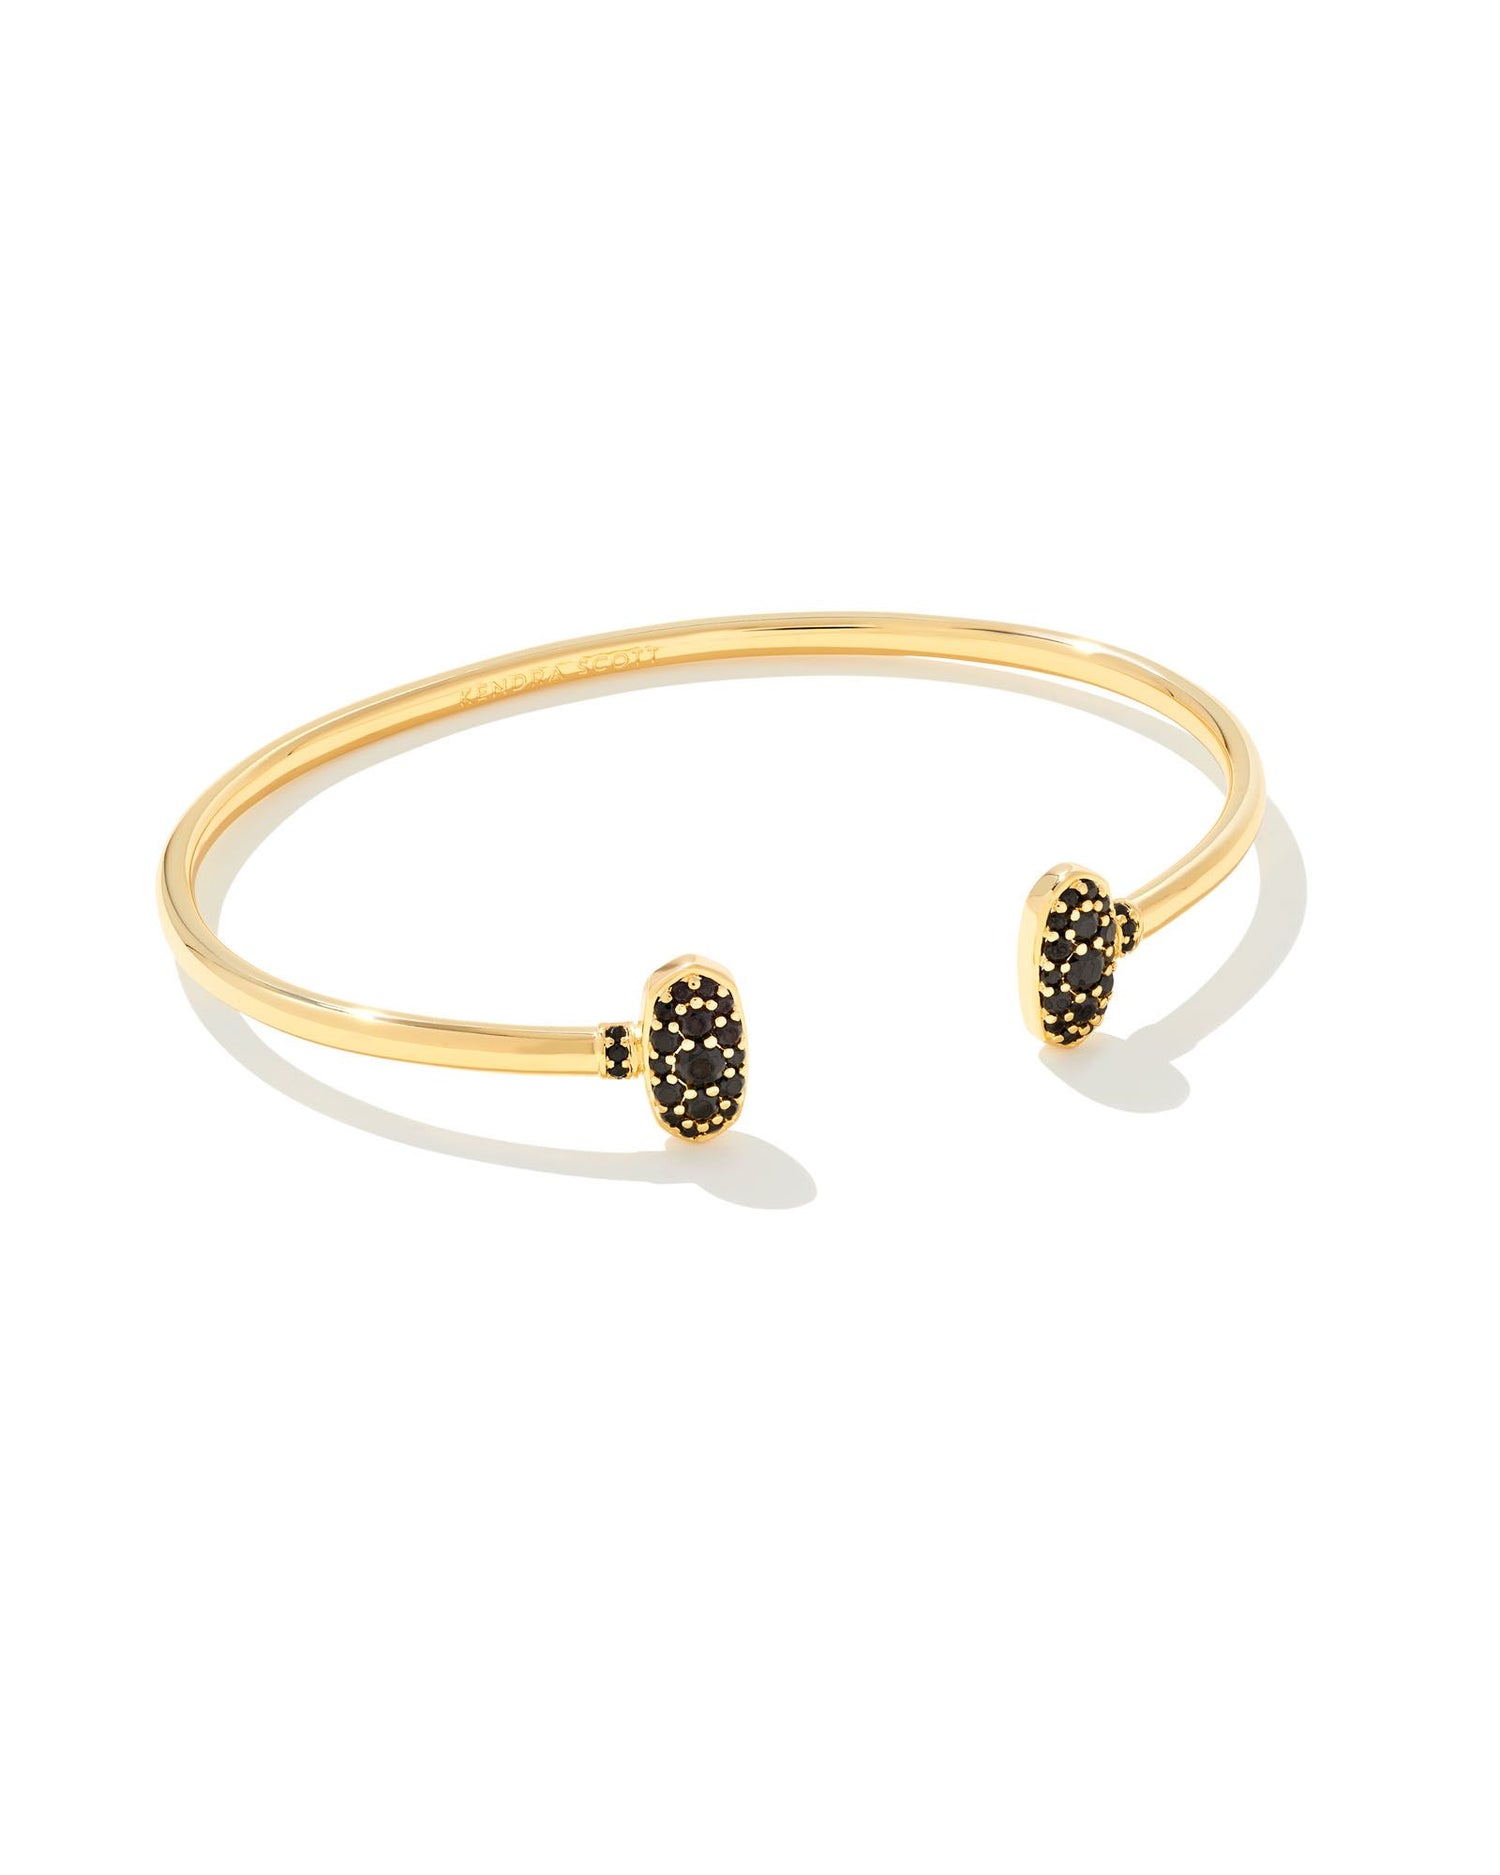 Kendra Scott Elaina Adjustable Bracelet in Black Drusy, Gold-Plated | REEDS  Jewelers